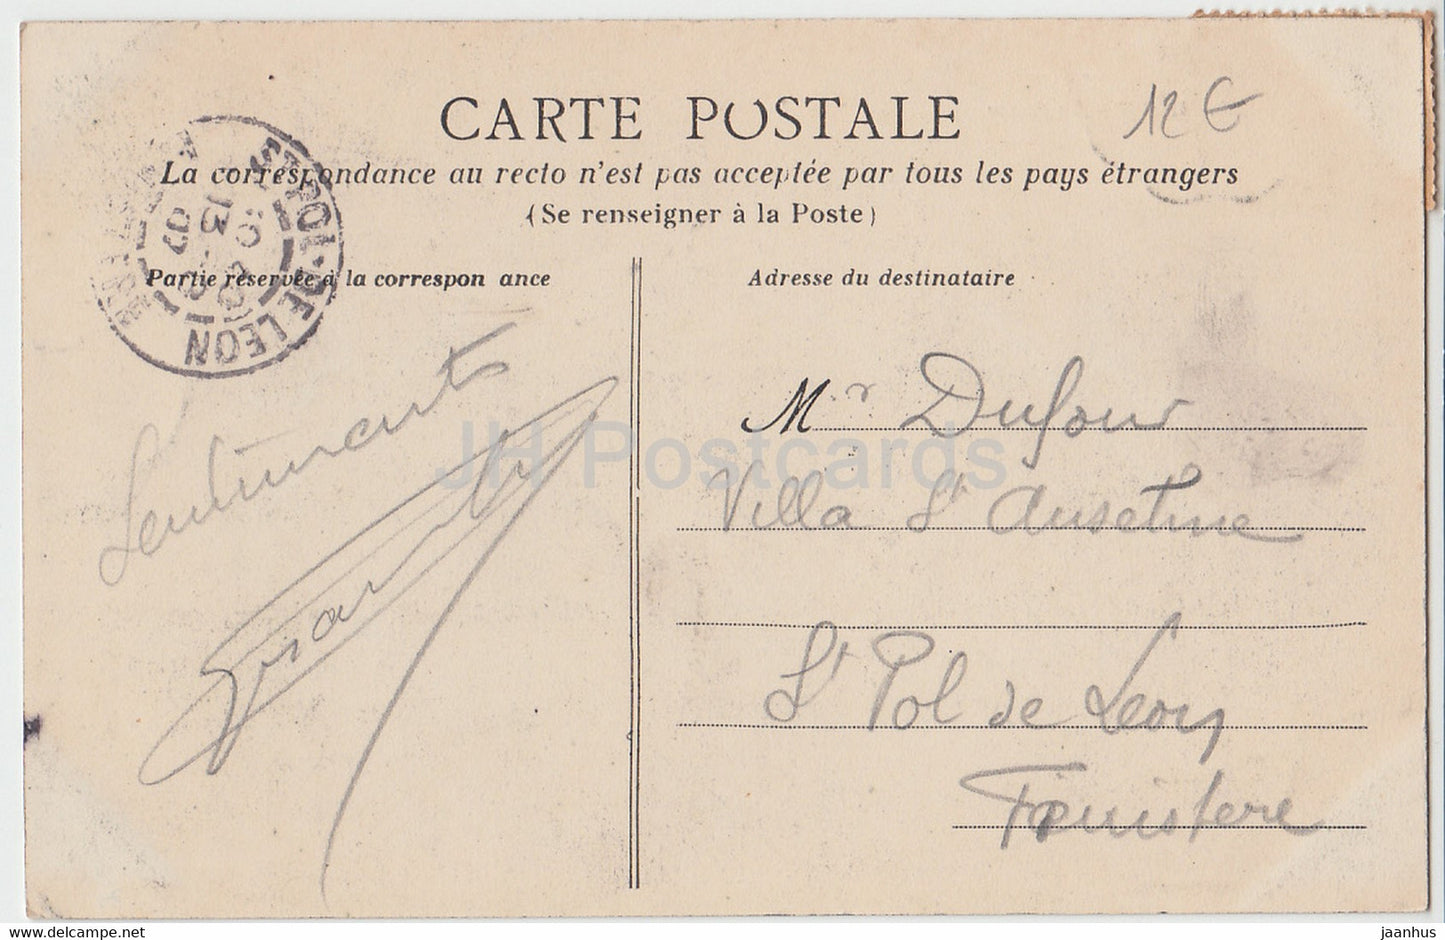 Brest - La Saone - ship - old postcard - 1907 - France - used